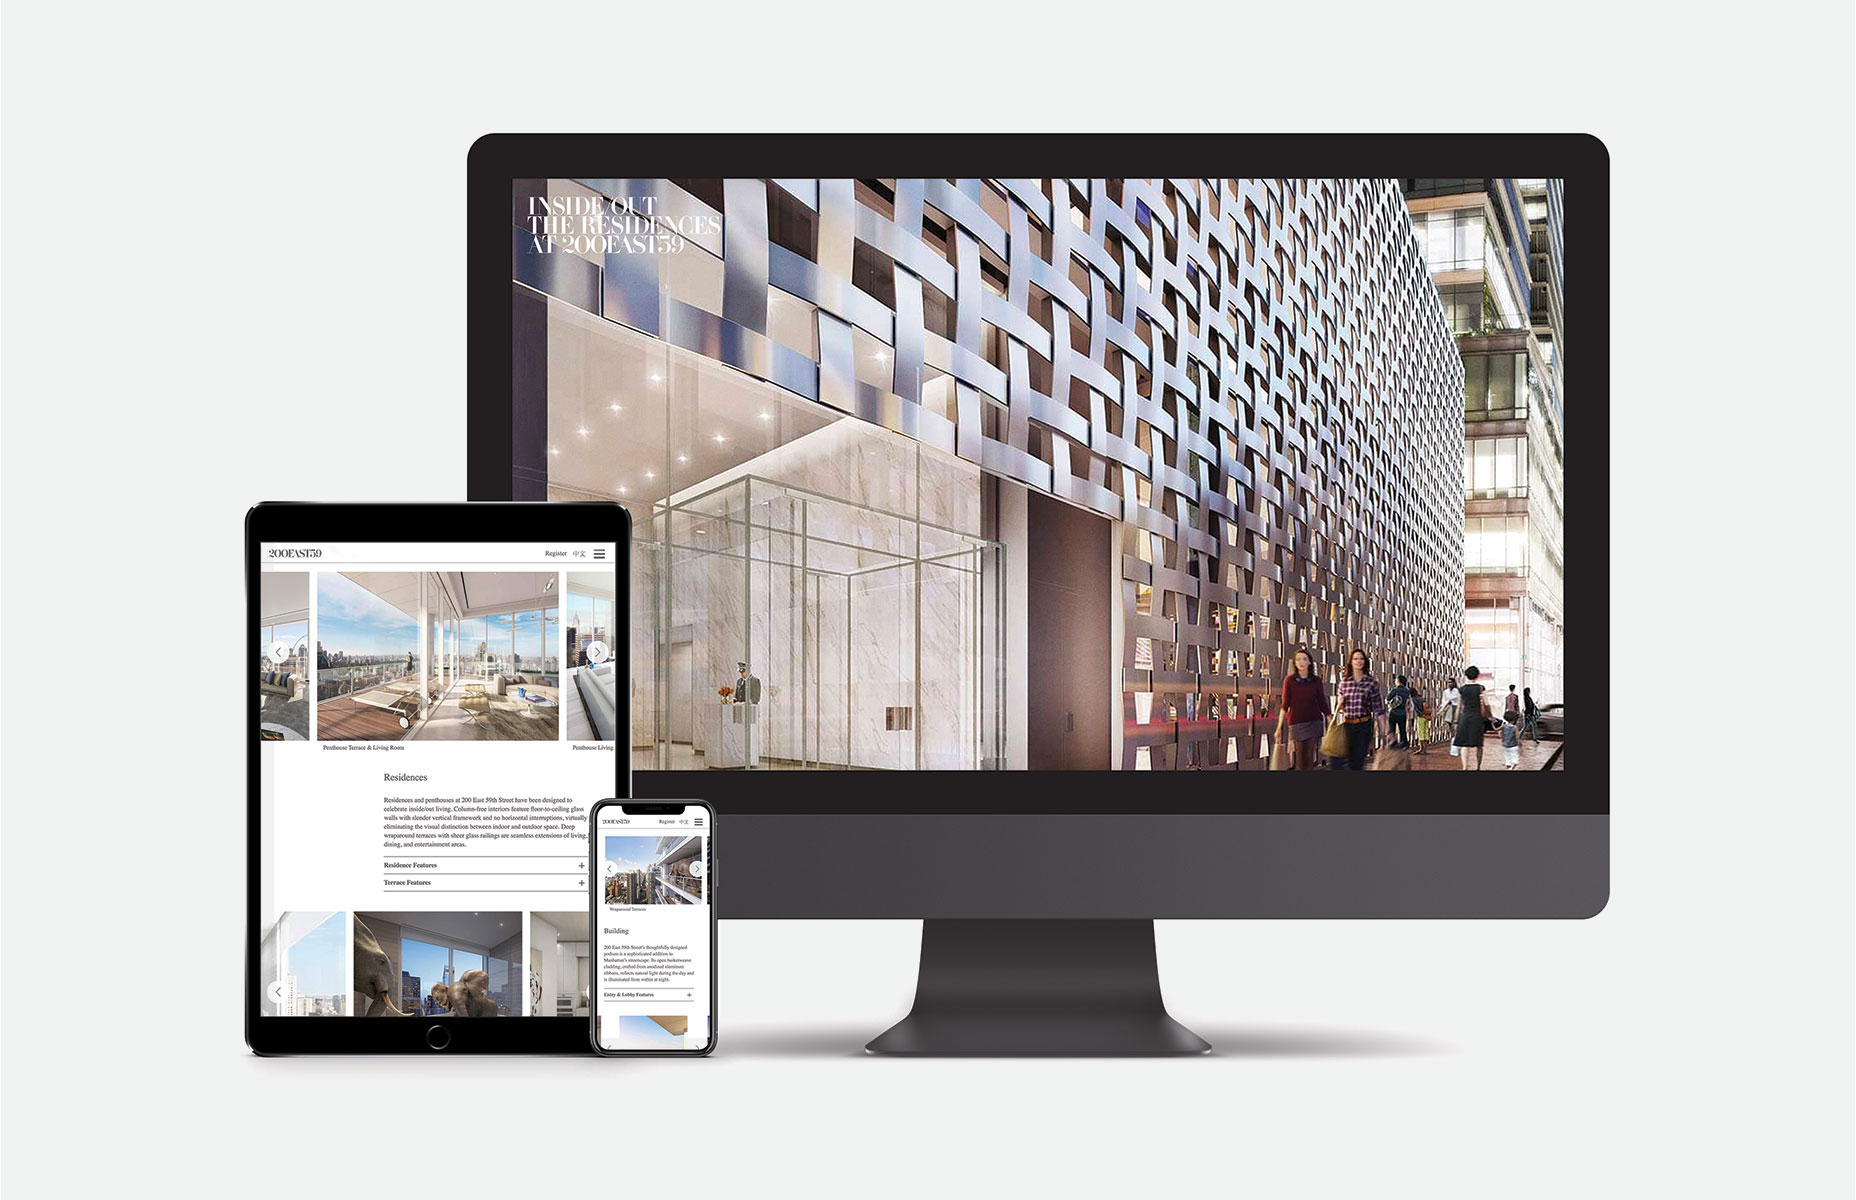 Digital website design in desktop, tablet, and mobile format for Inside/Out The Residencies at 200 East 59, Macklowe Properties.